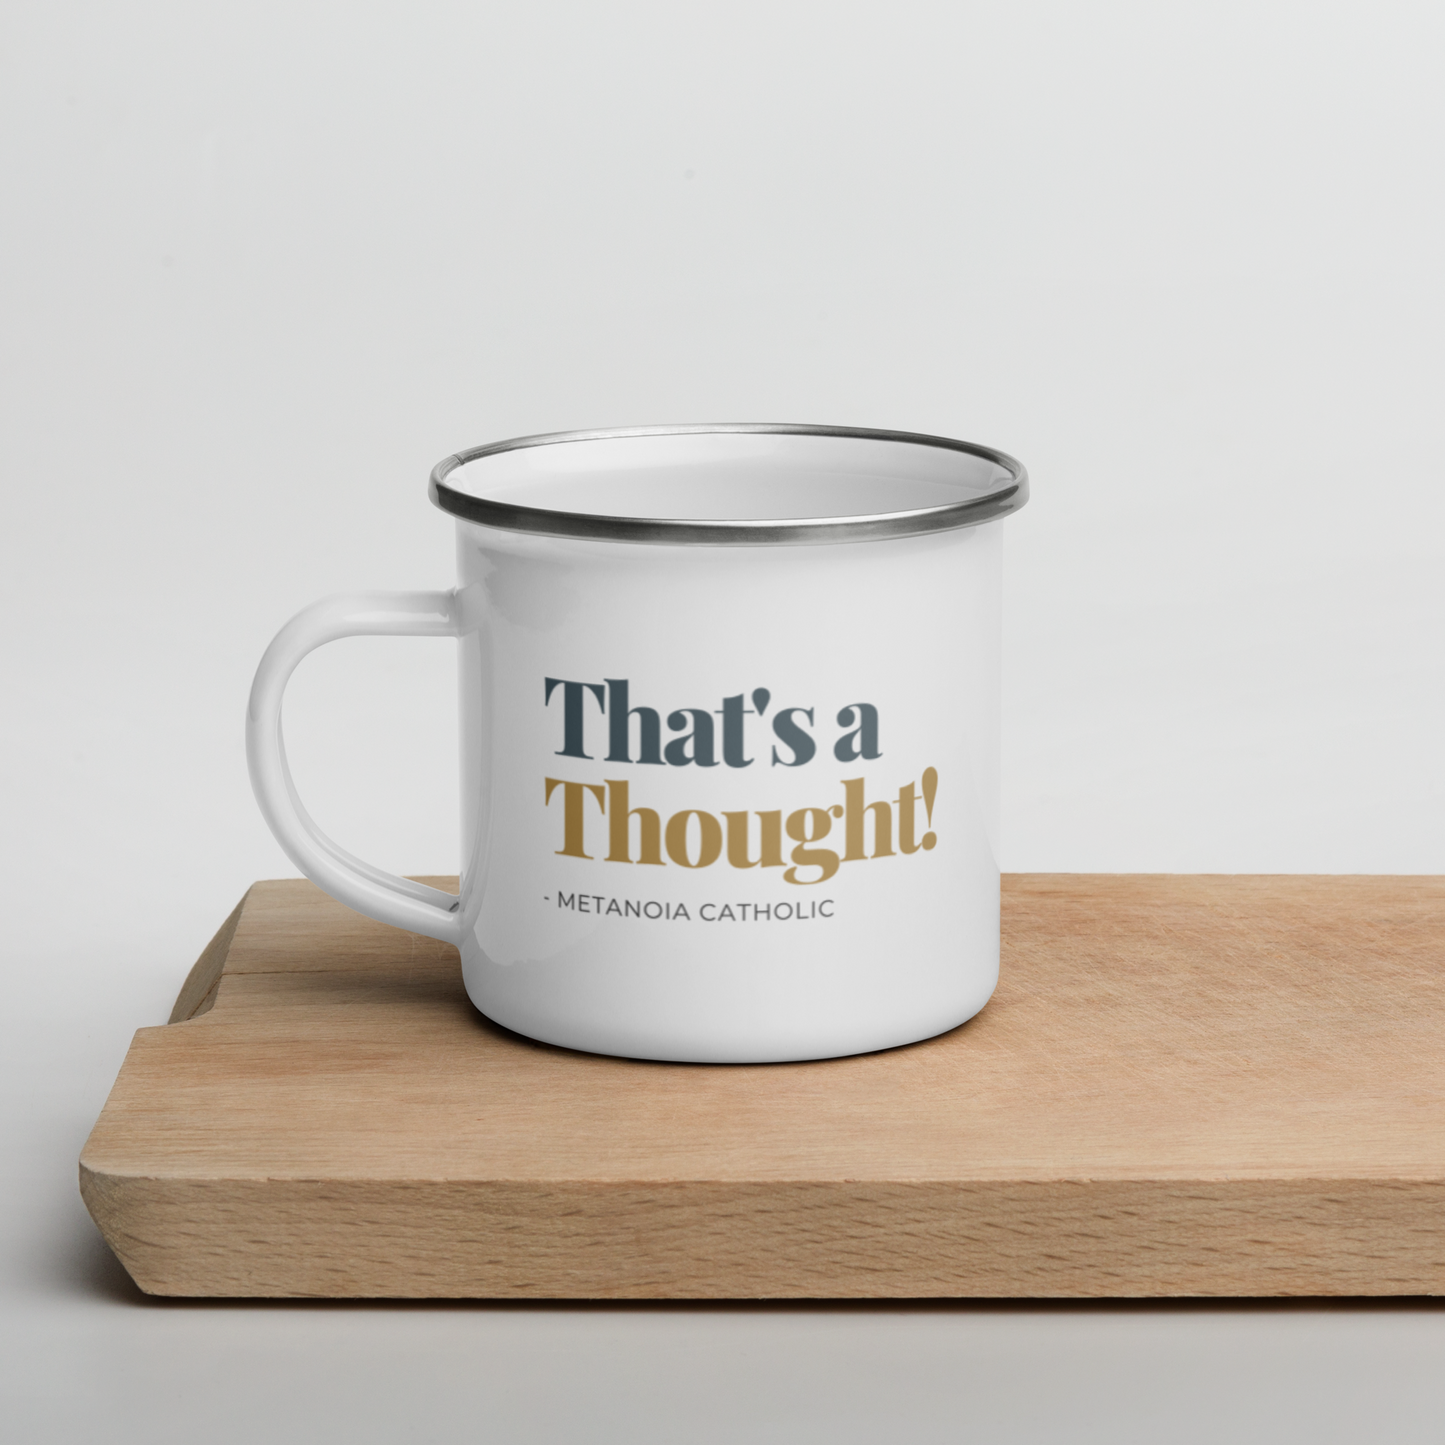 That's a Thought - Enamel Mug